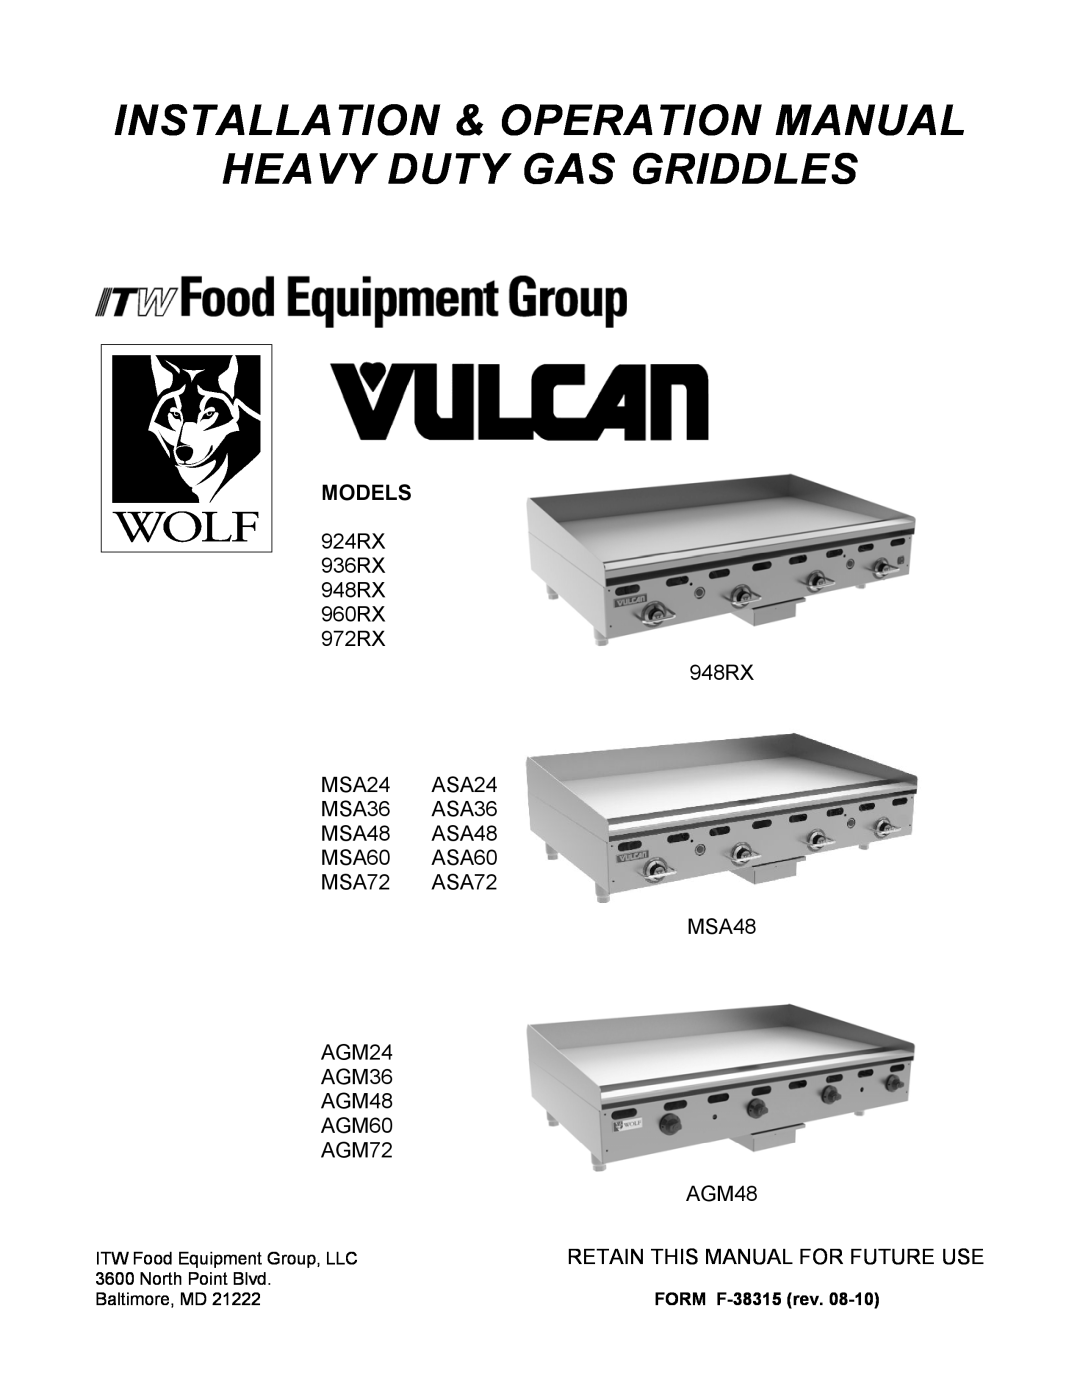 Vulcan-Hart MSA60 ASA60, MSA72 ASA72, MSA48 ASA48, AGM60 operation manual Models, AGM48, Retain This Manual For Future Use 